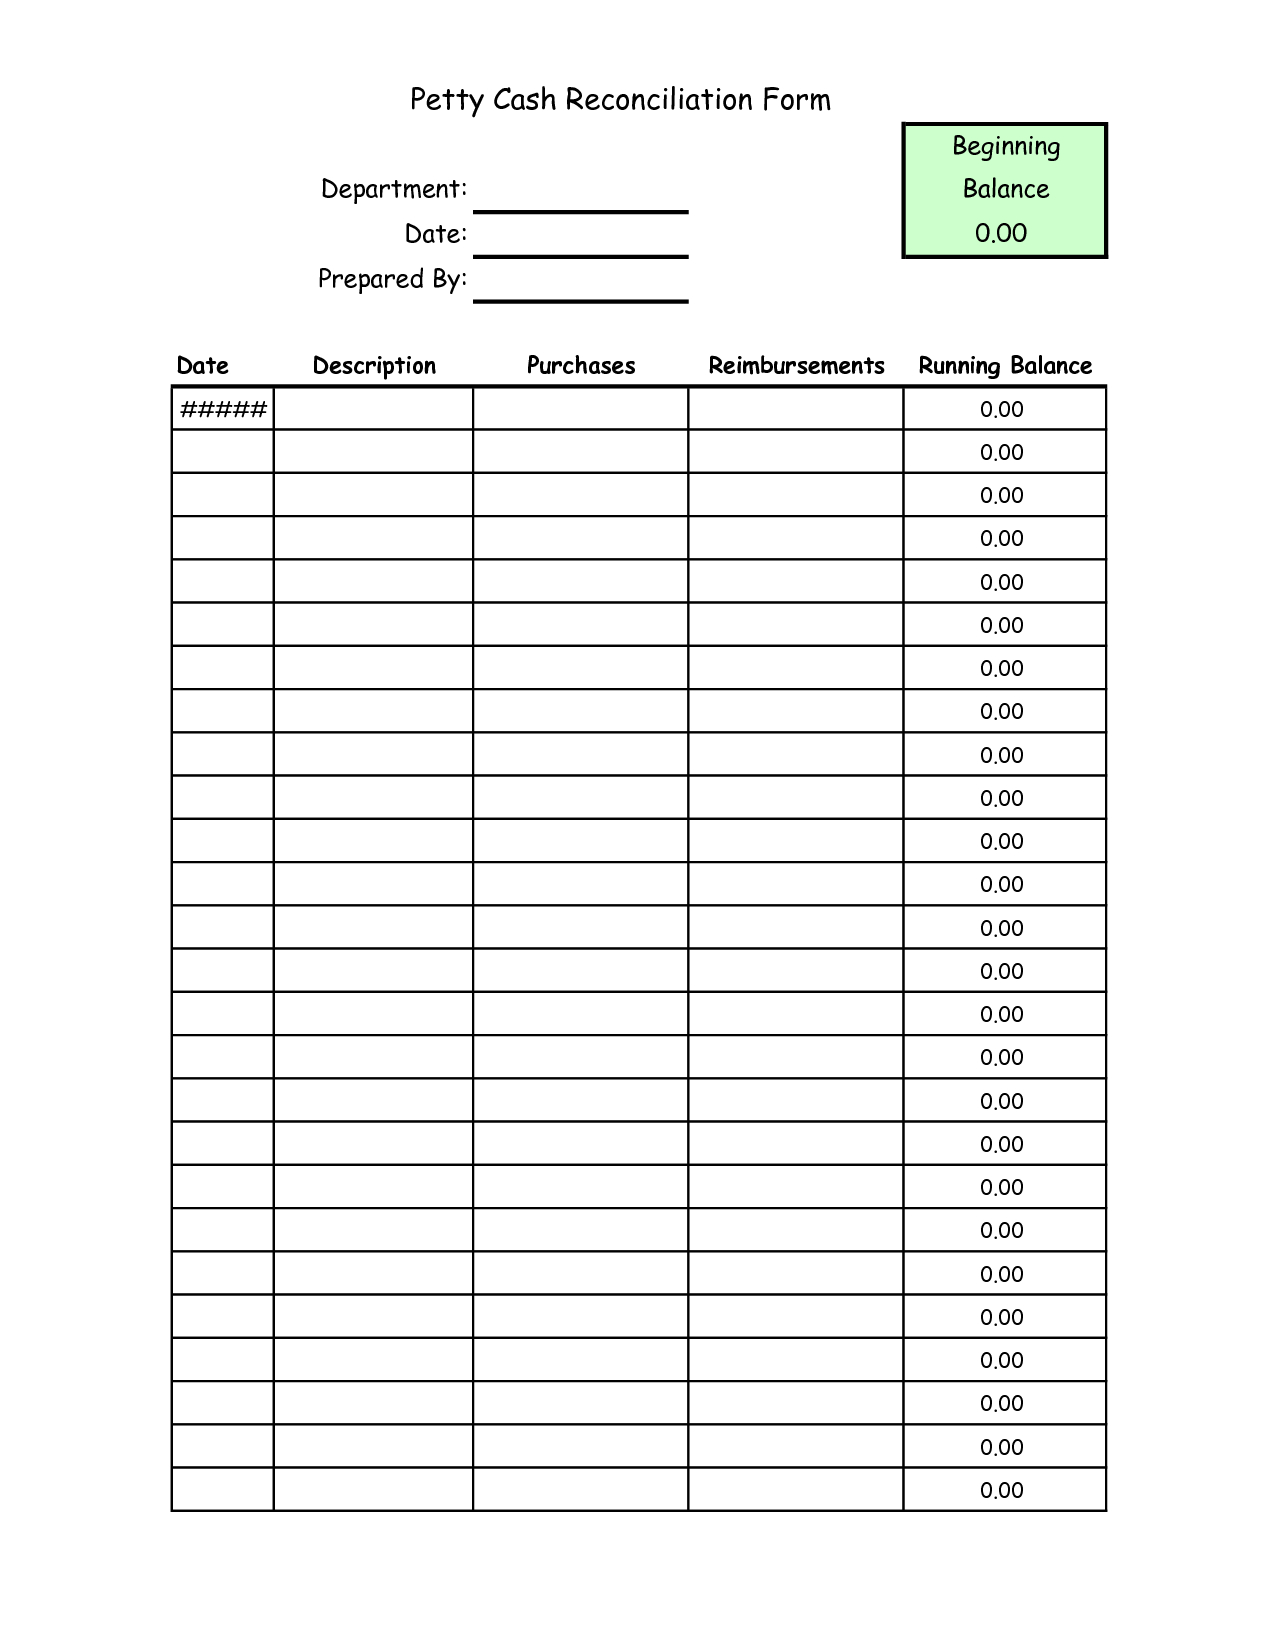 Petty Cash Reconciliation Form Template | Template | Templates - Free Printable Petty Cash Template